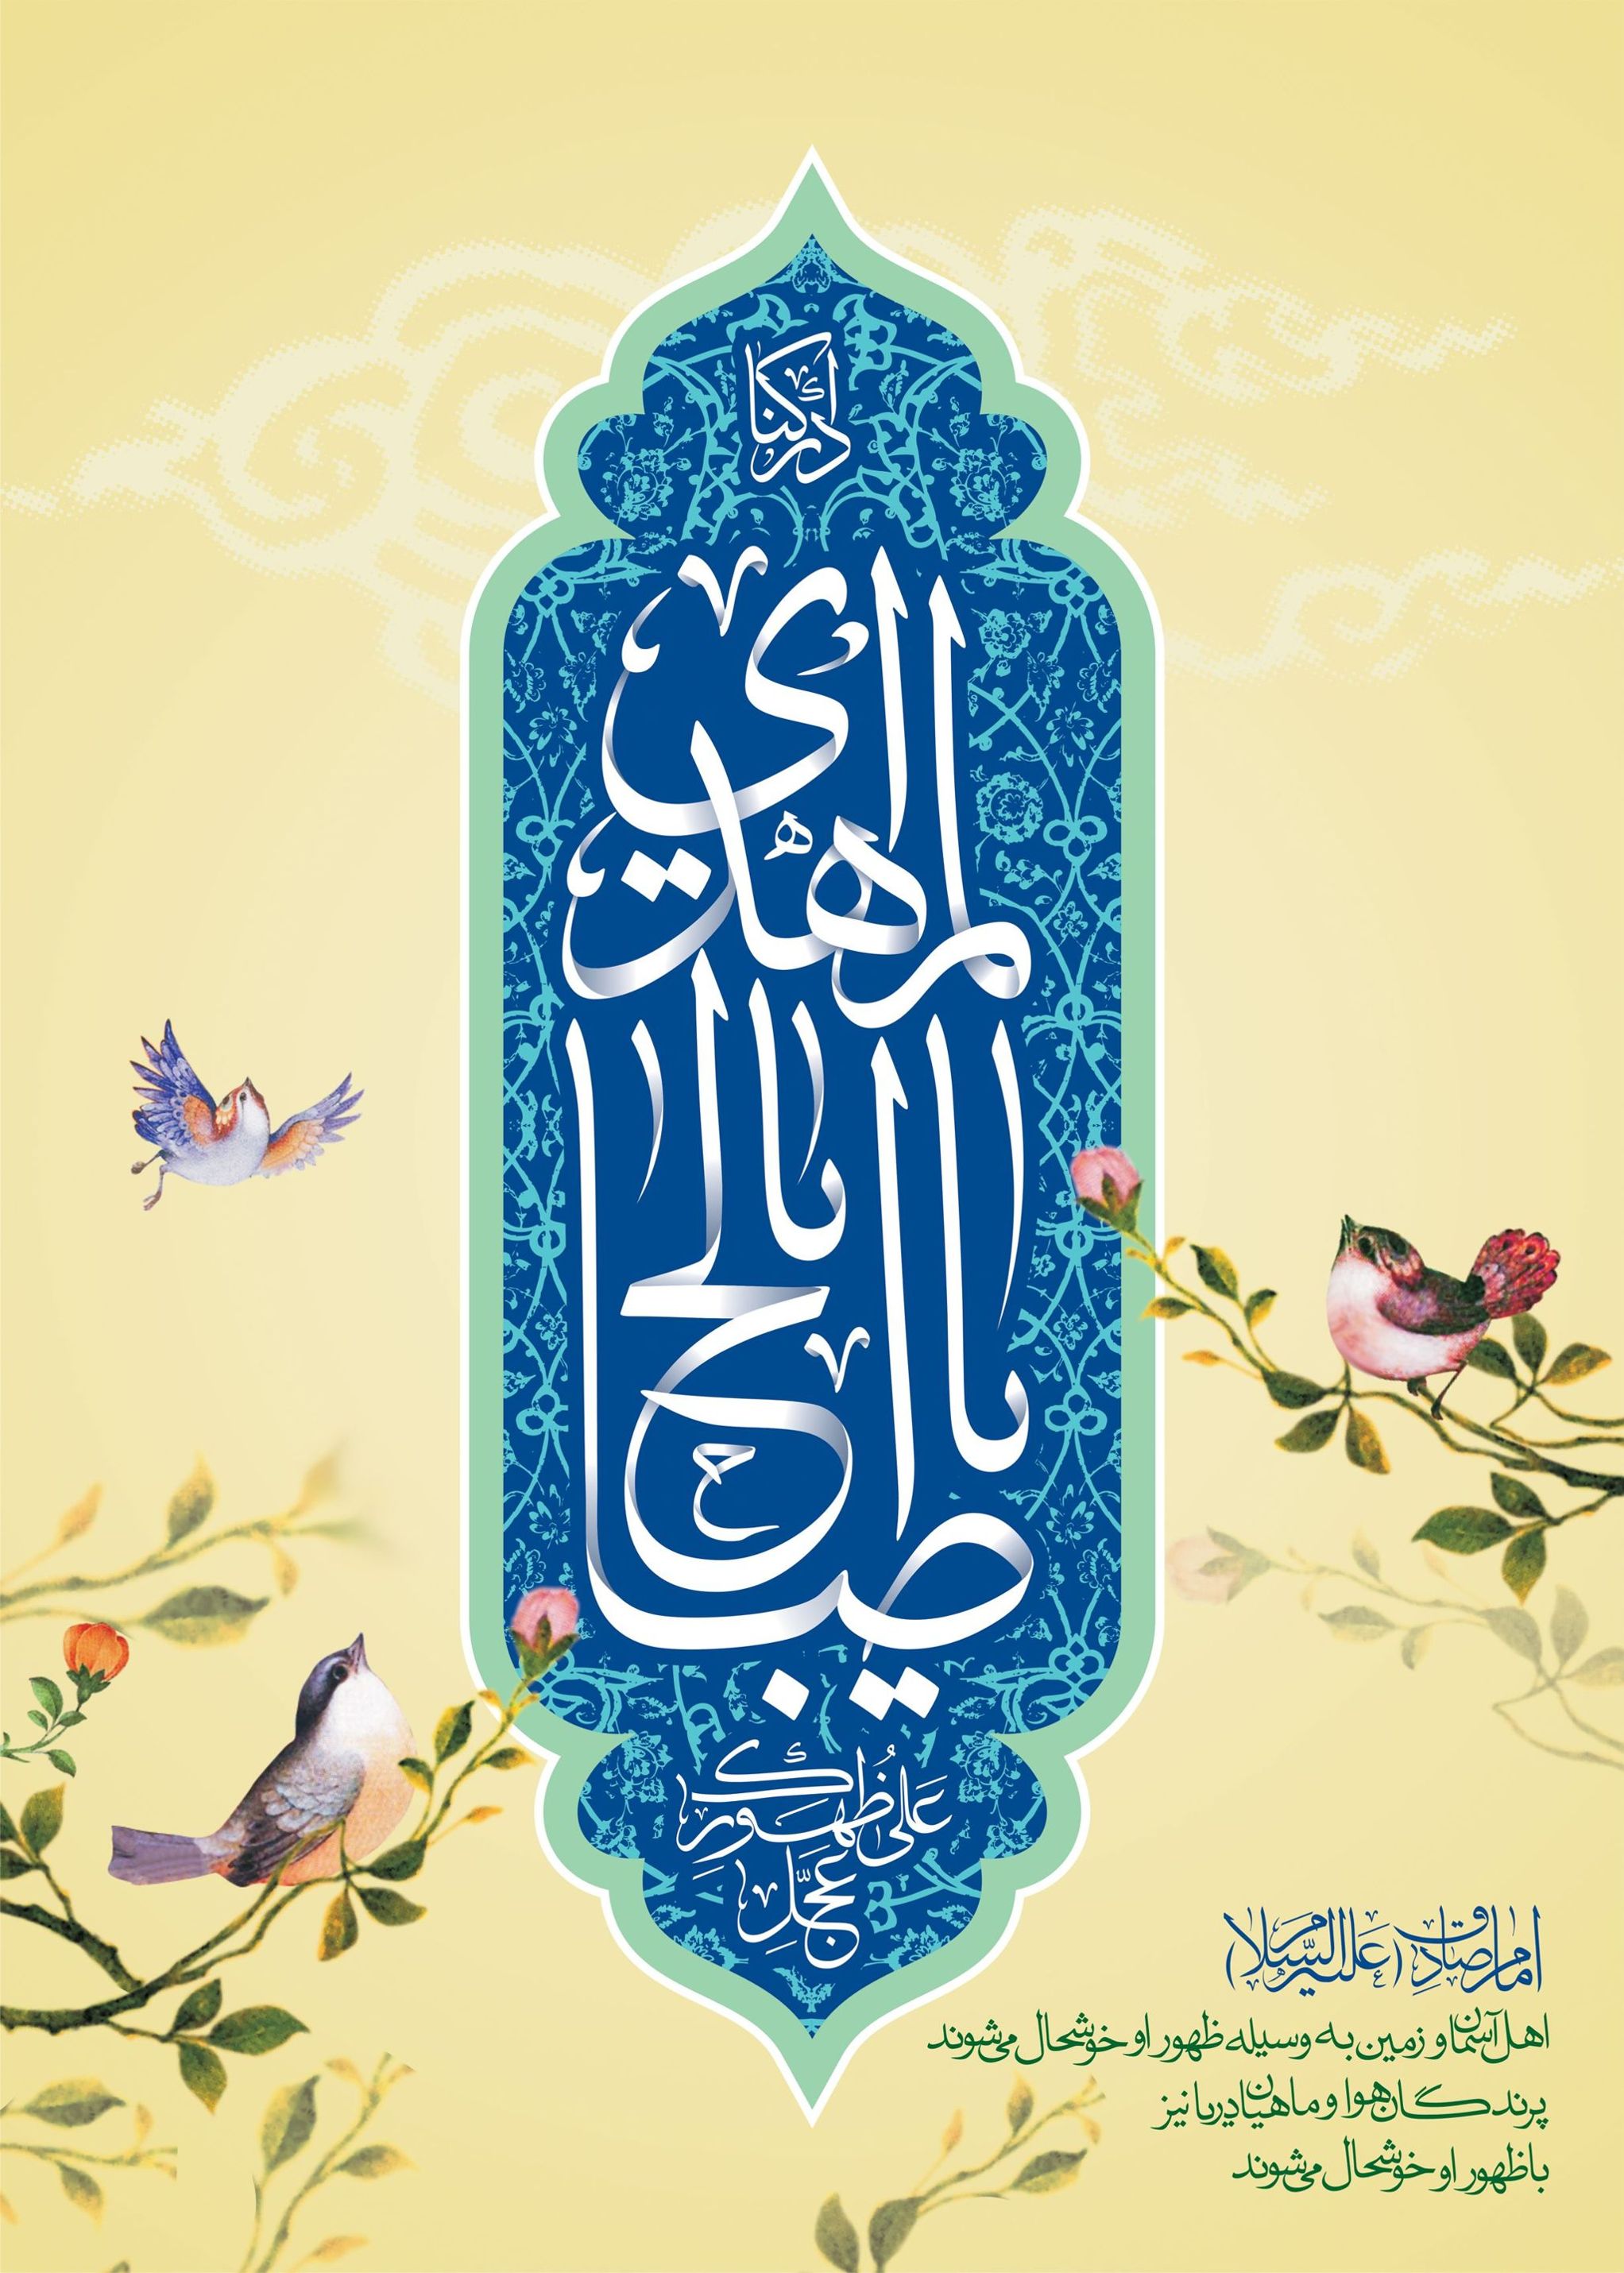 http://bashiran.ir/wp-content/uploads/2015/06/imam-zaman-1.jpg